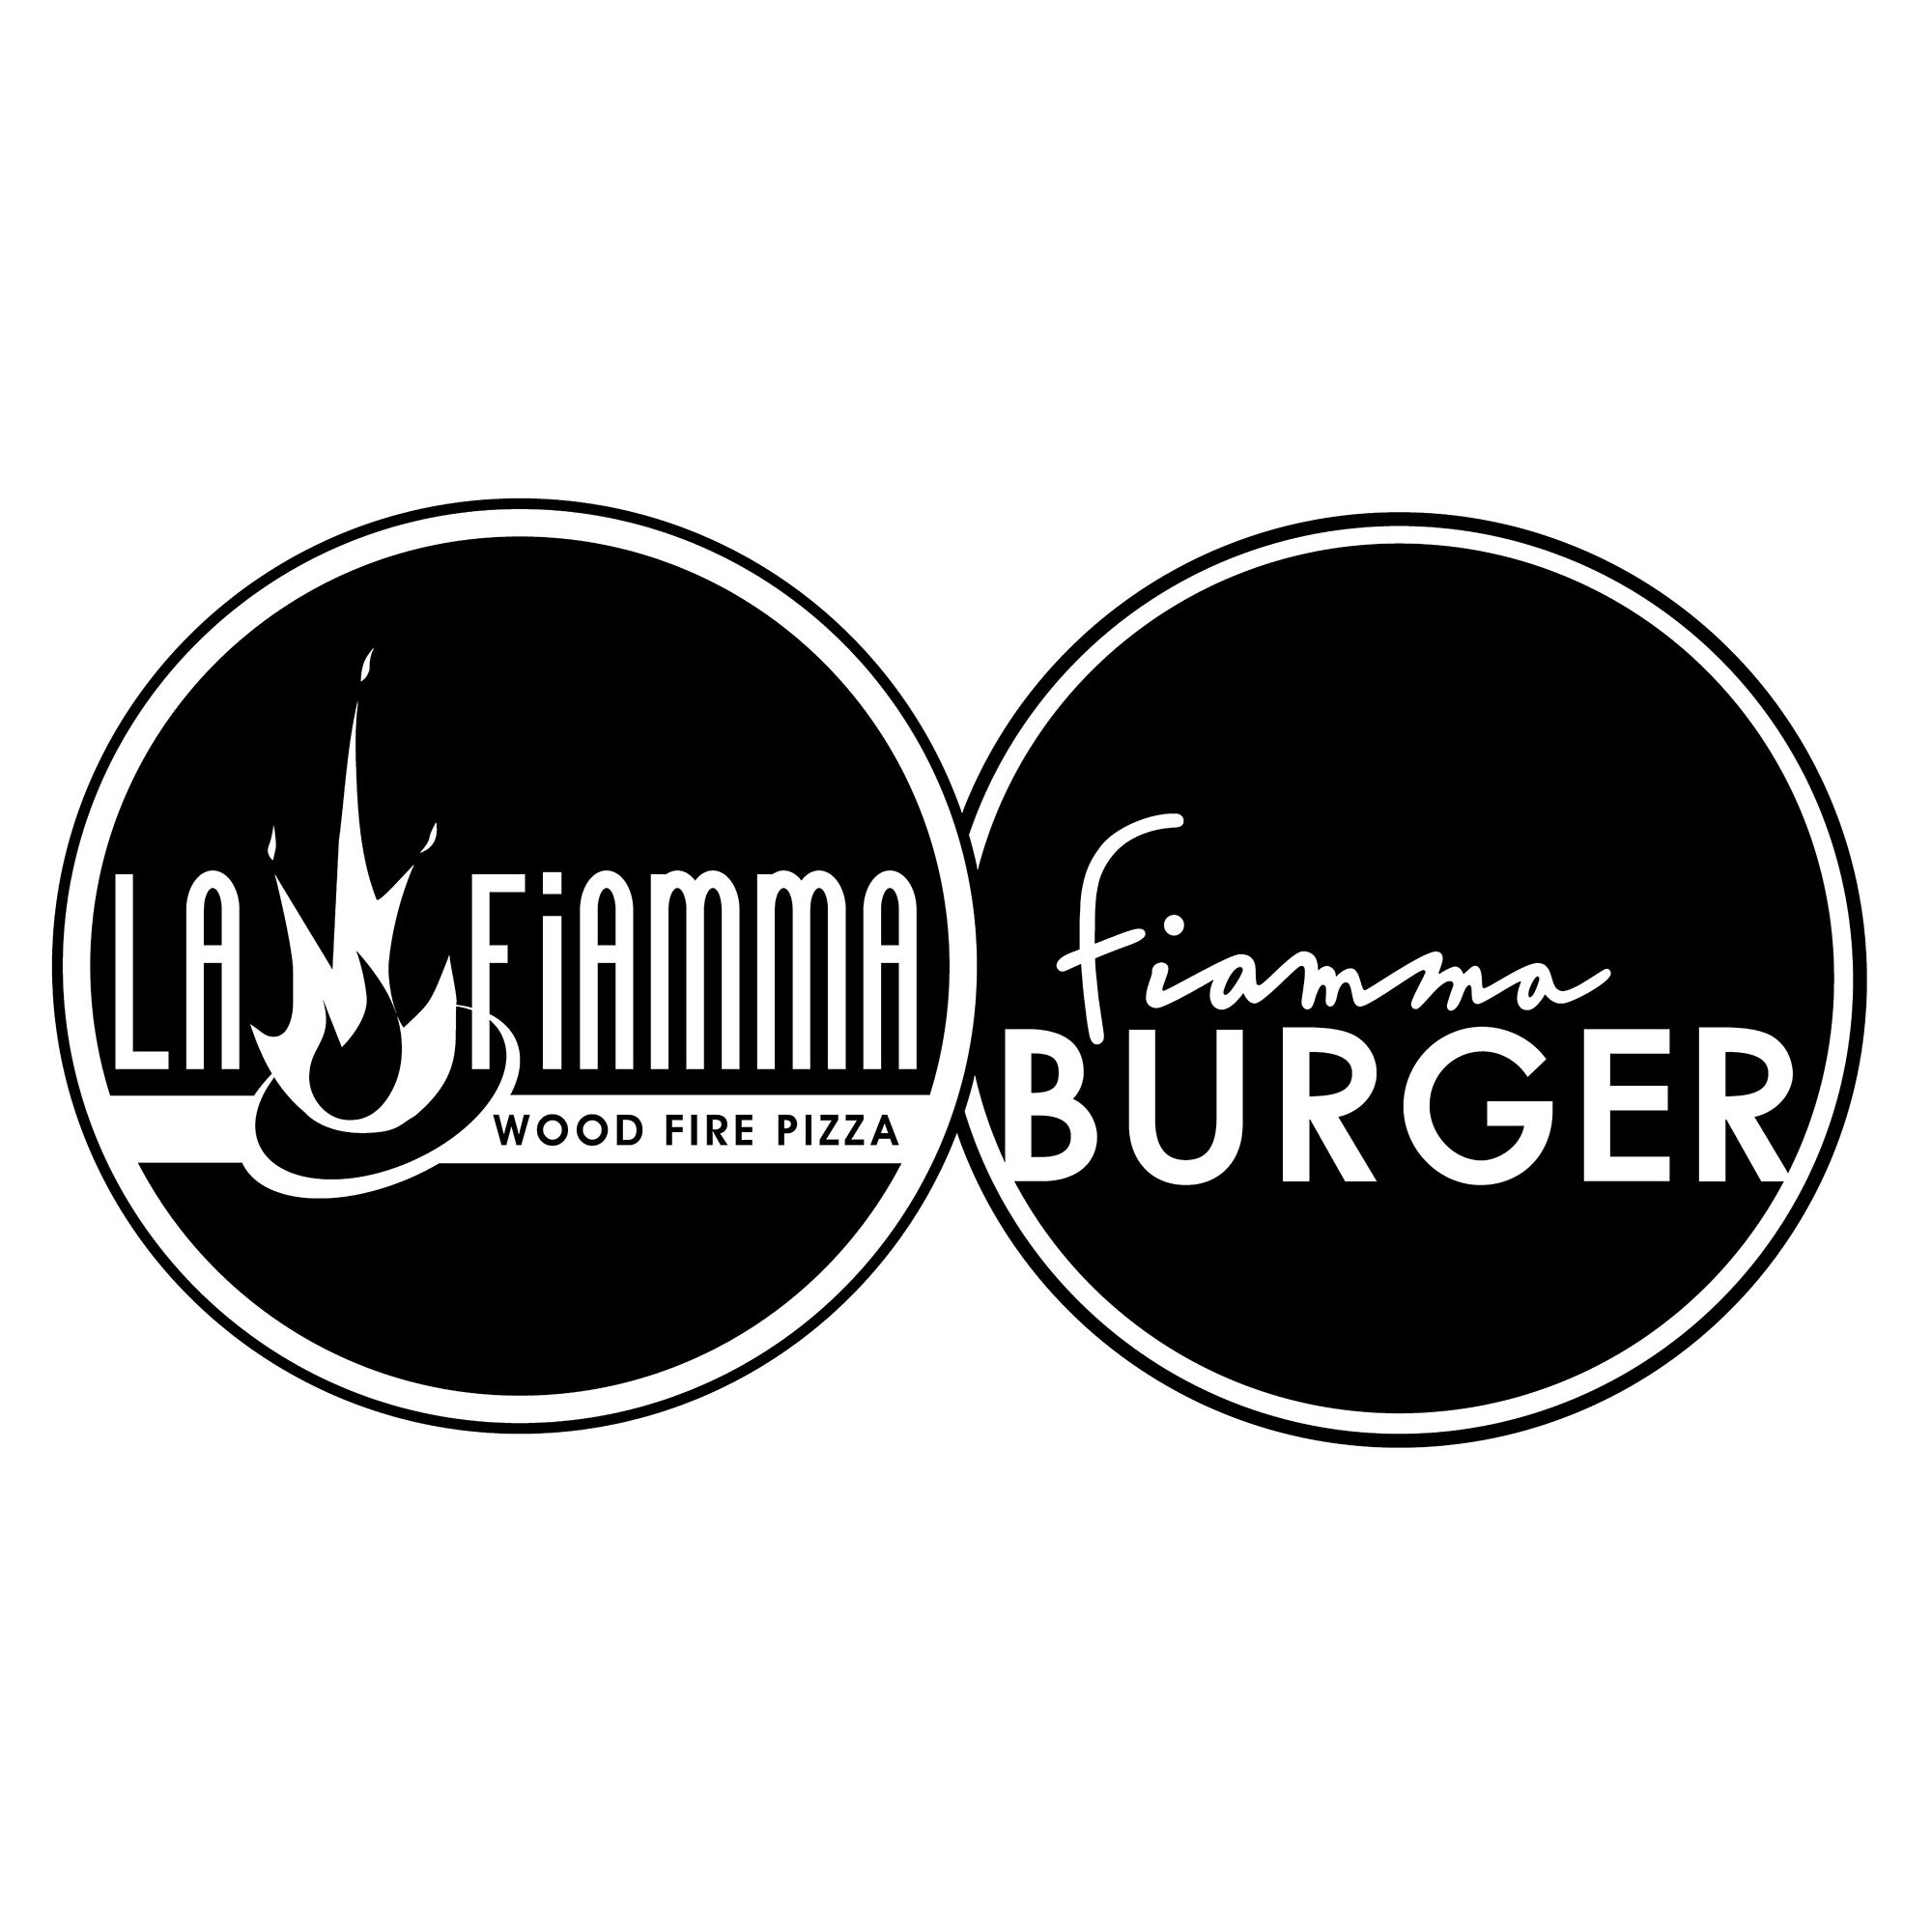 Download Fiamma logos — LA FiAMMA